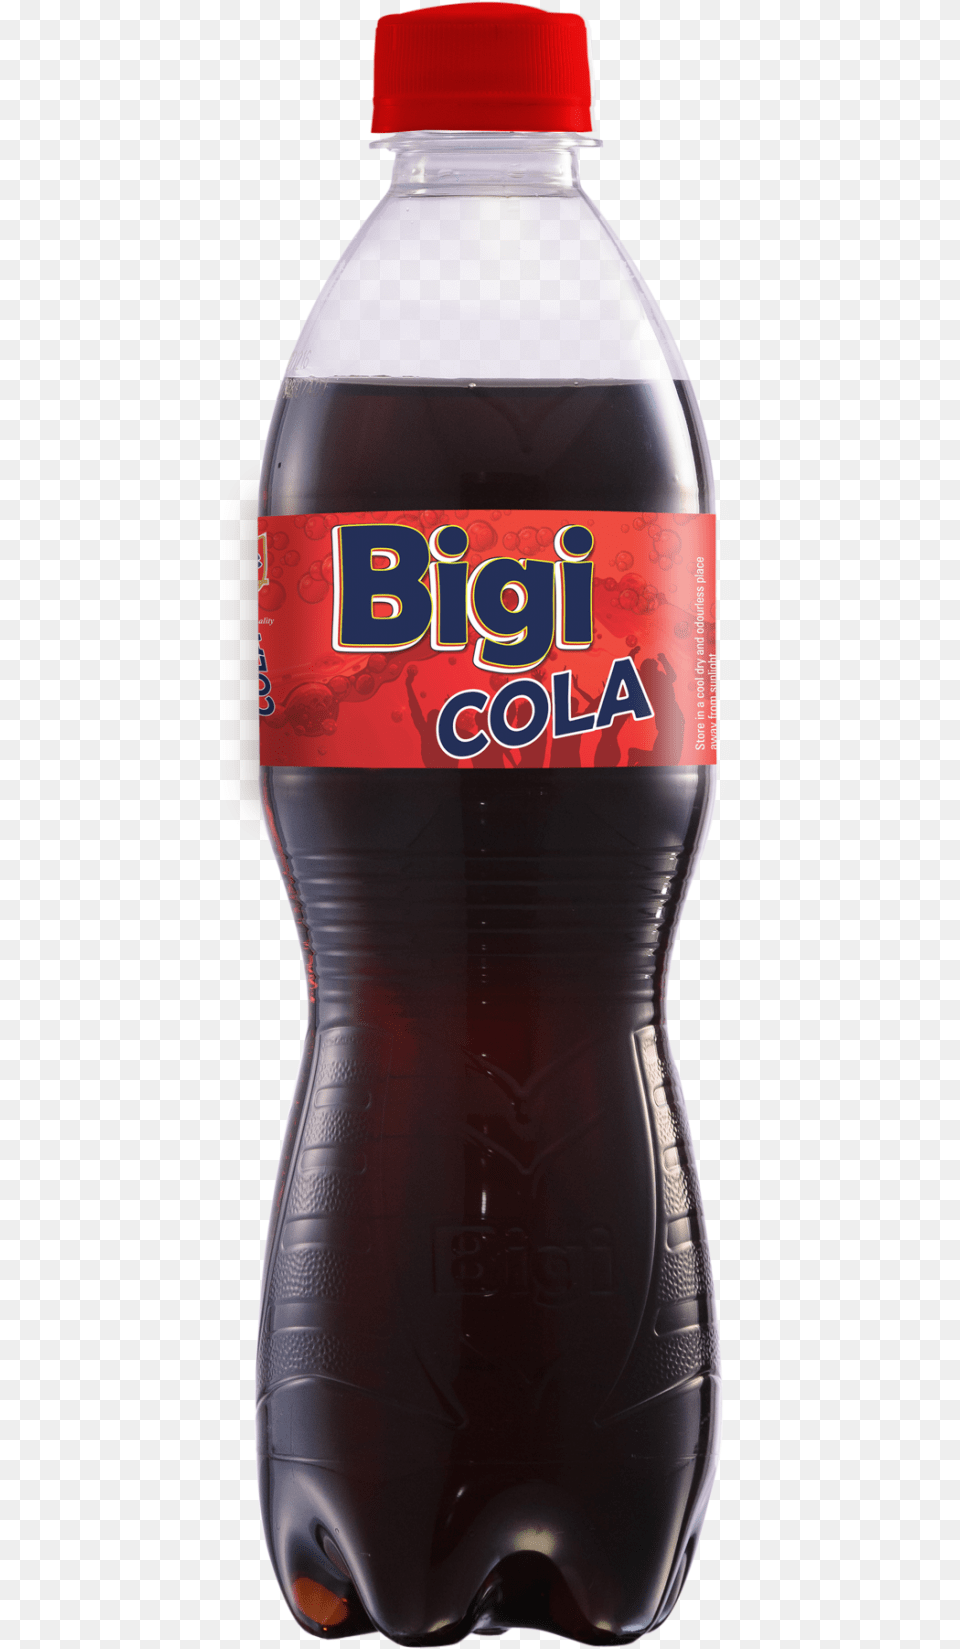 Bigi Cola, Beverage, Coke, Soda, Alcohol Png Image